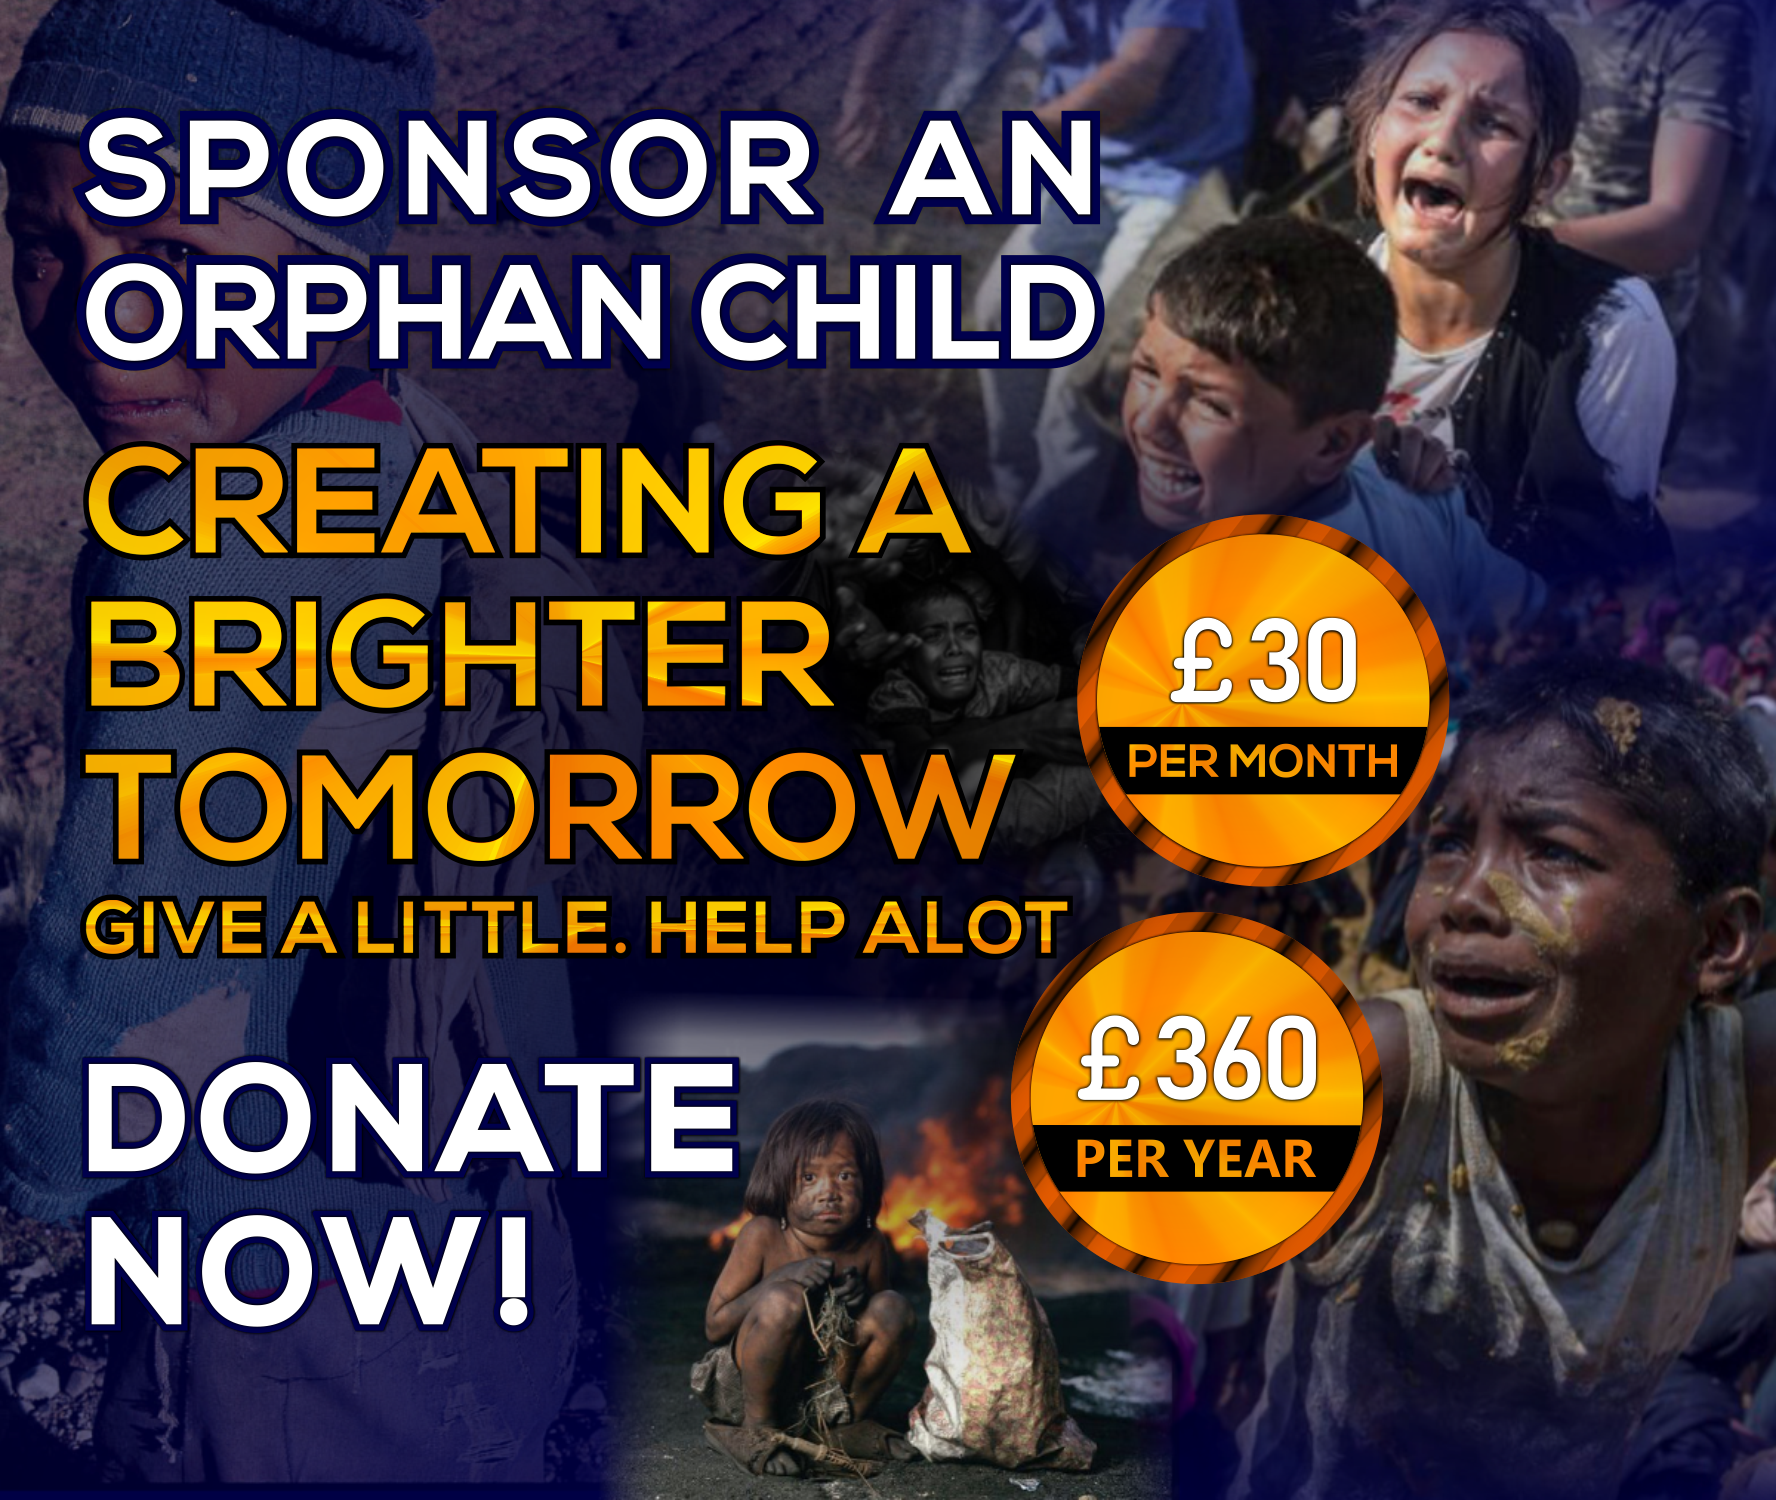 Sponsor an orphan child: £30